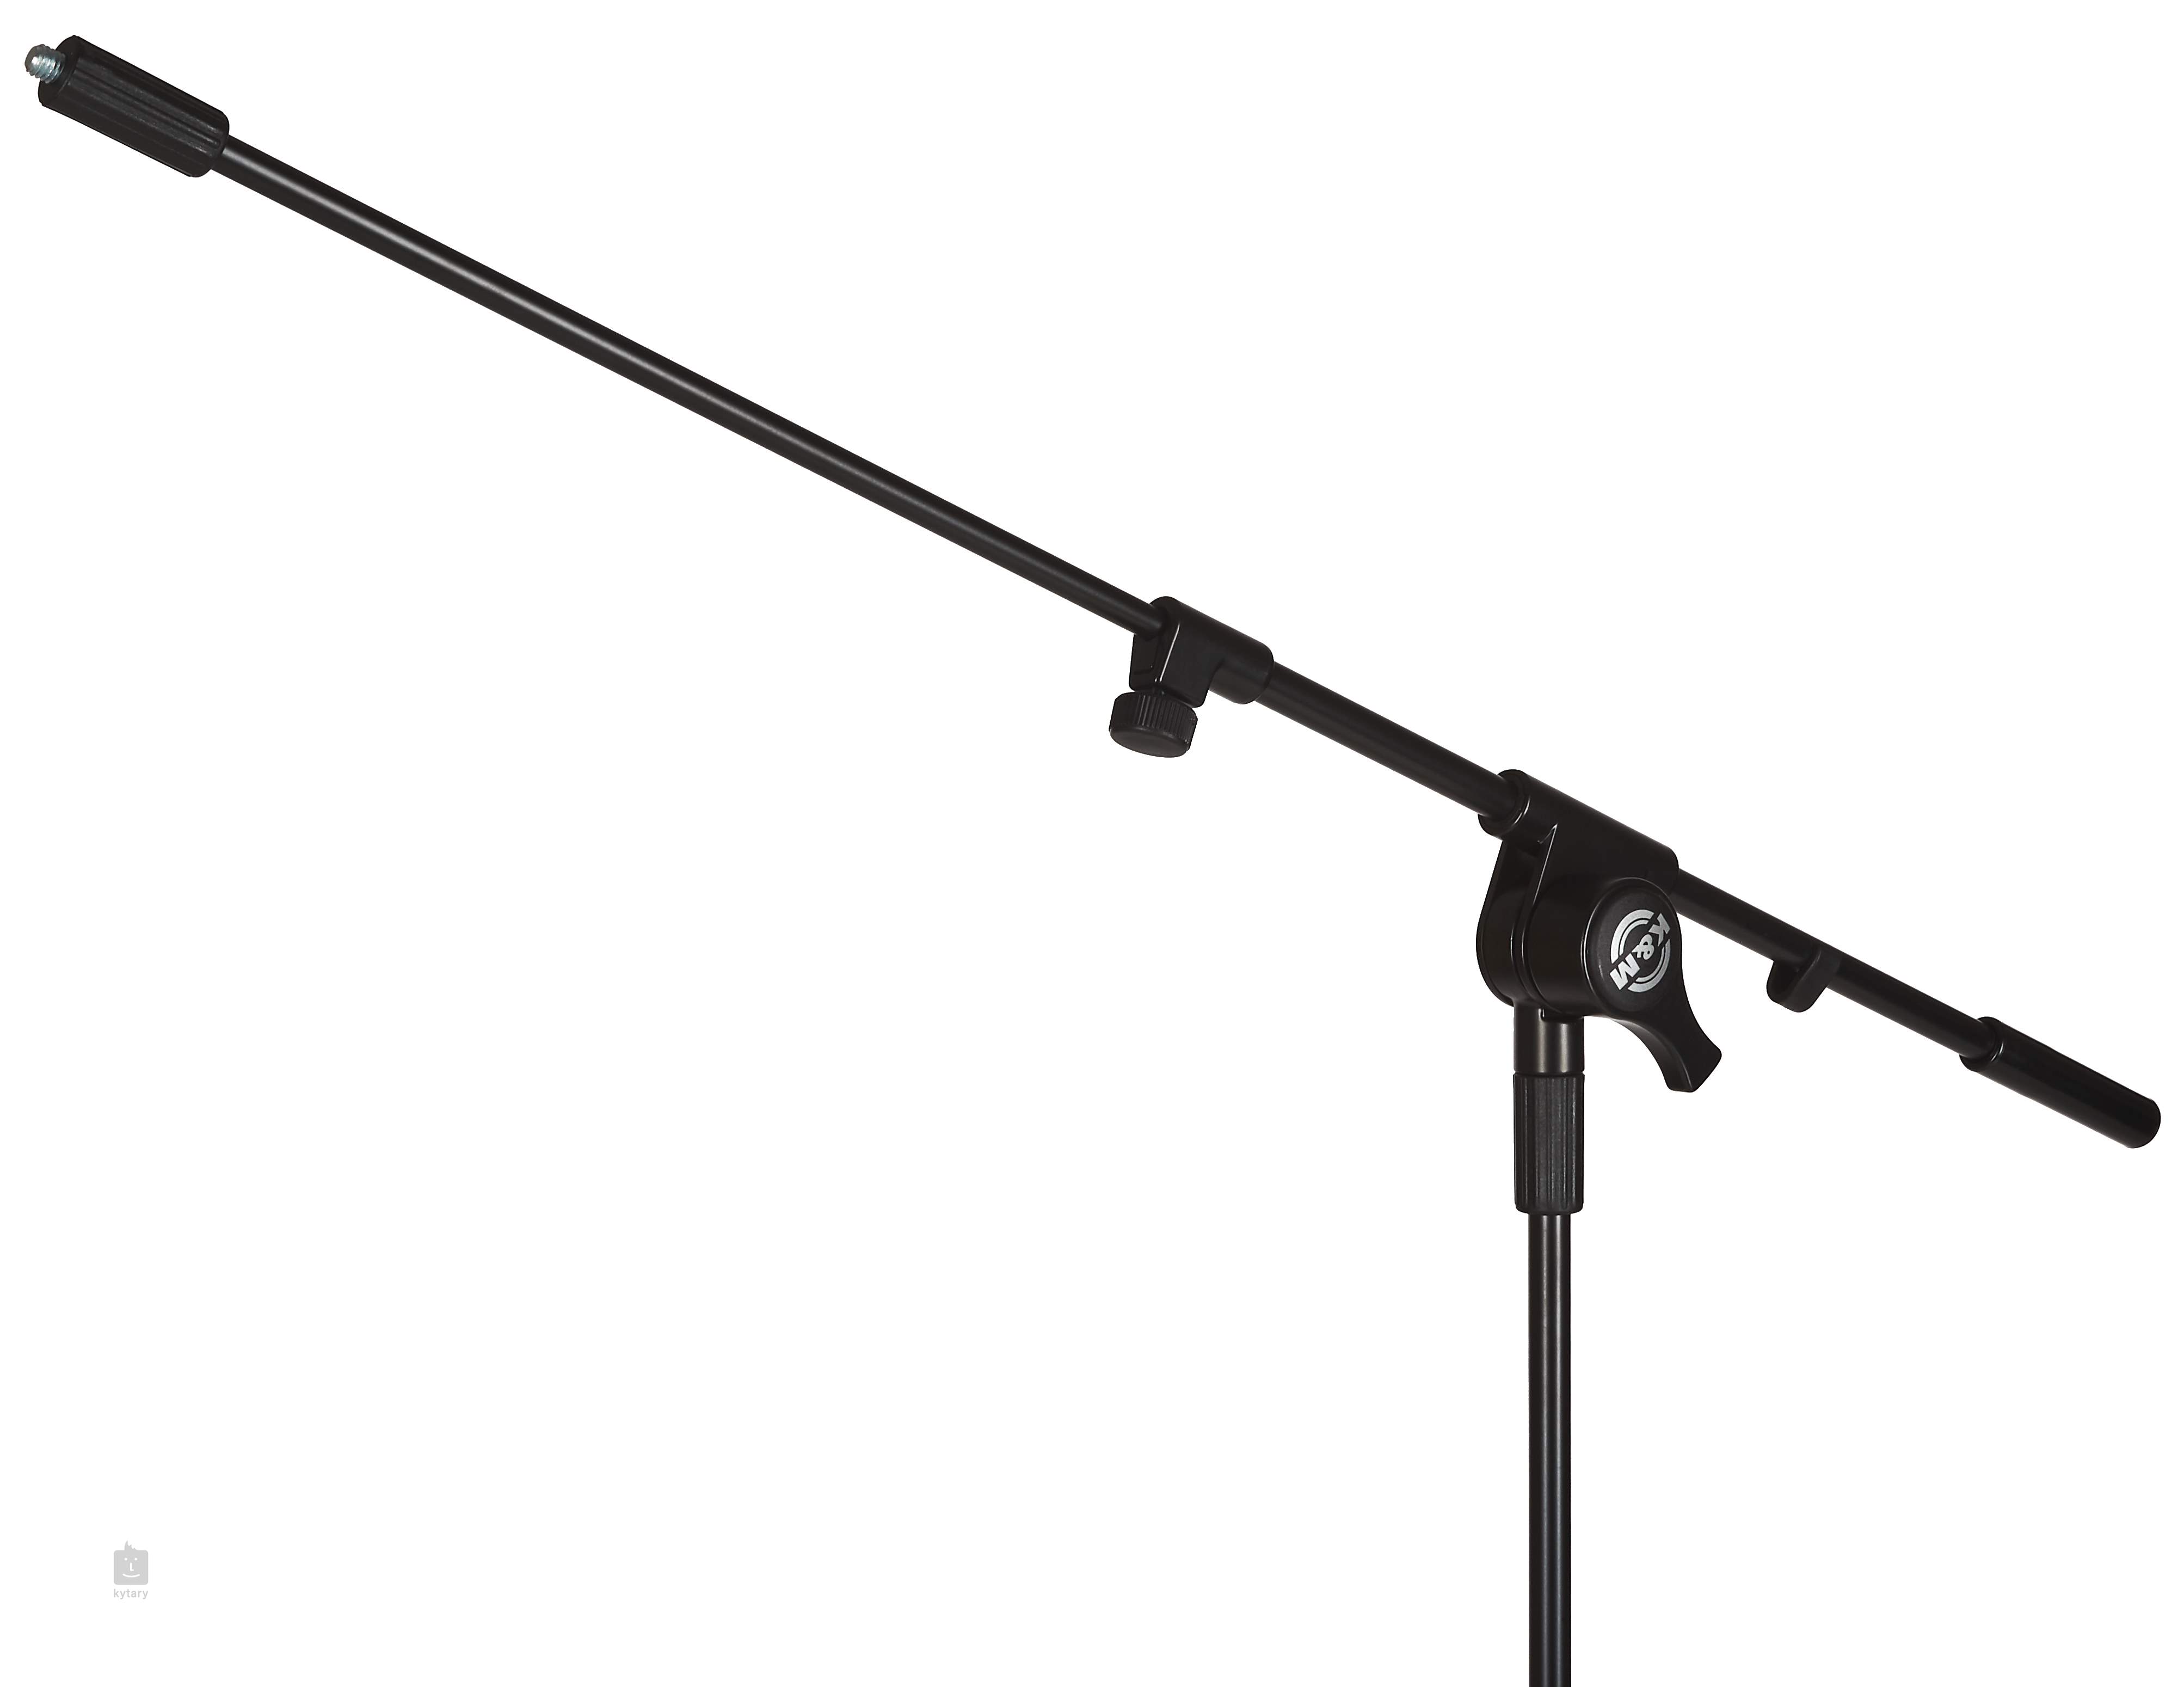 K & M Soporte para micrófono con brazo telescópico